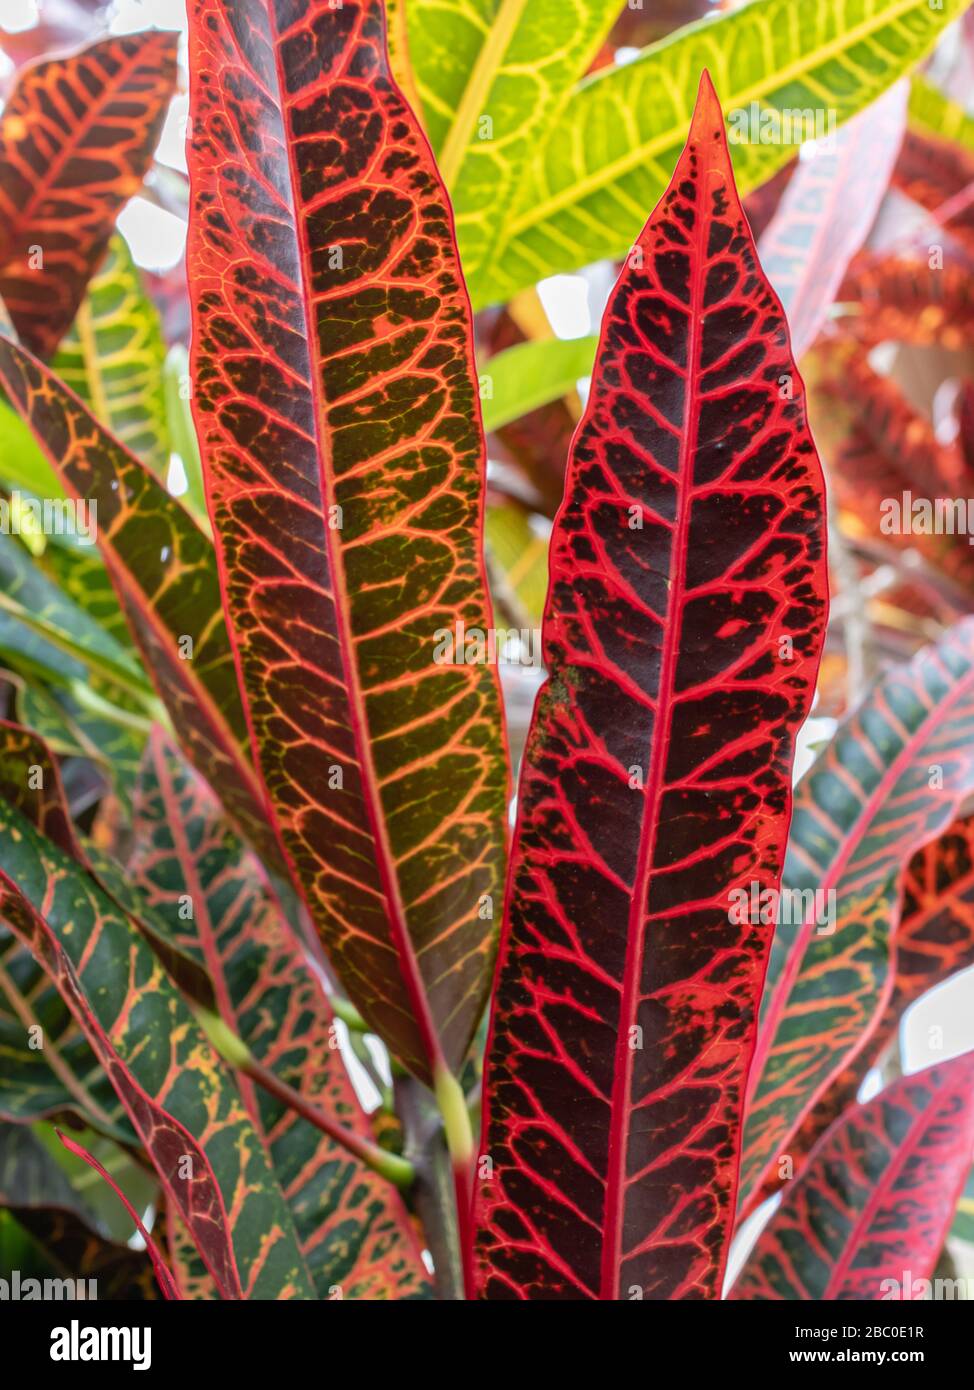 Hoja rojiza de la planta perenne del género Codiaeum de la familia Euphorbiaceae, Areal, Río de Janeiro, Brasil Foto de stock